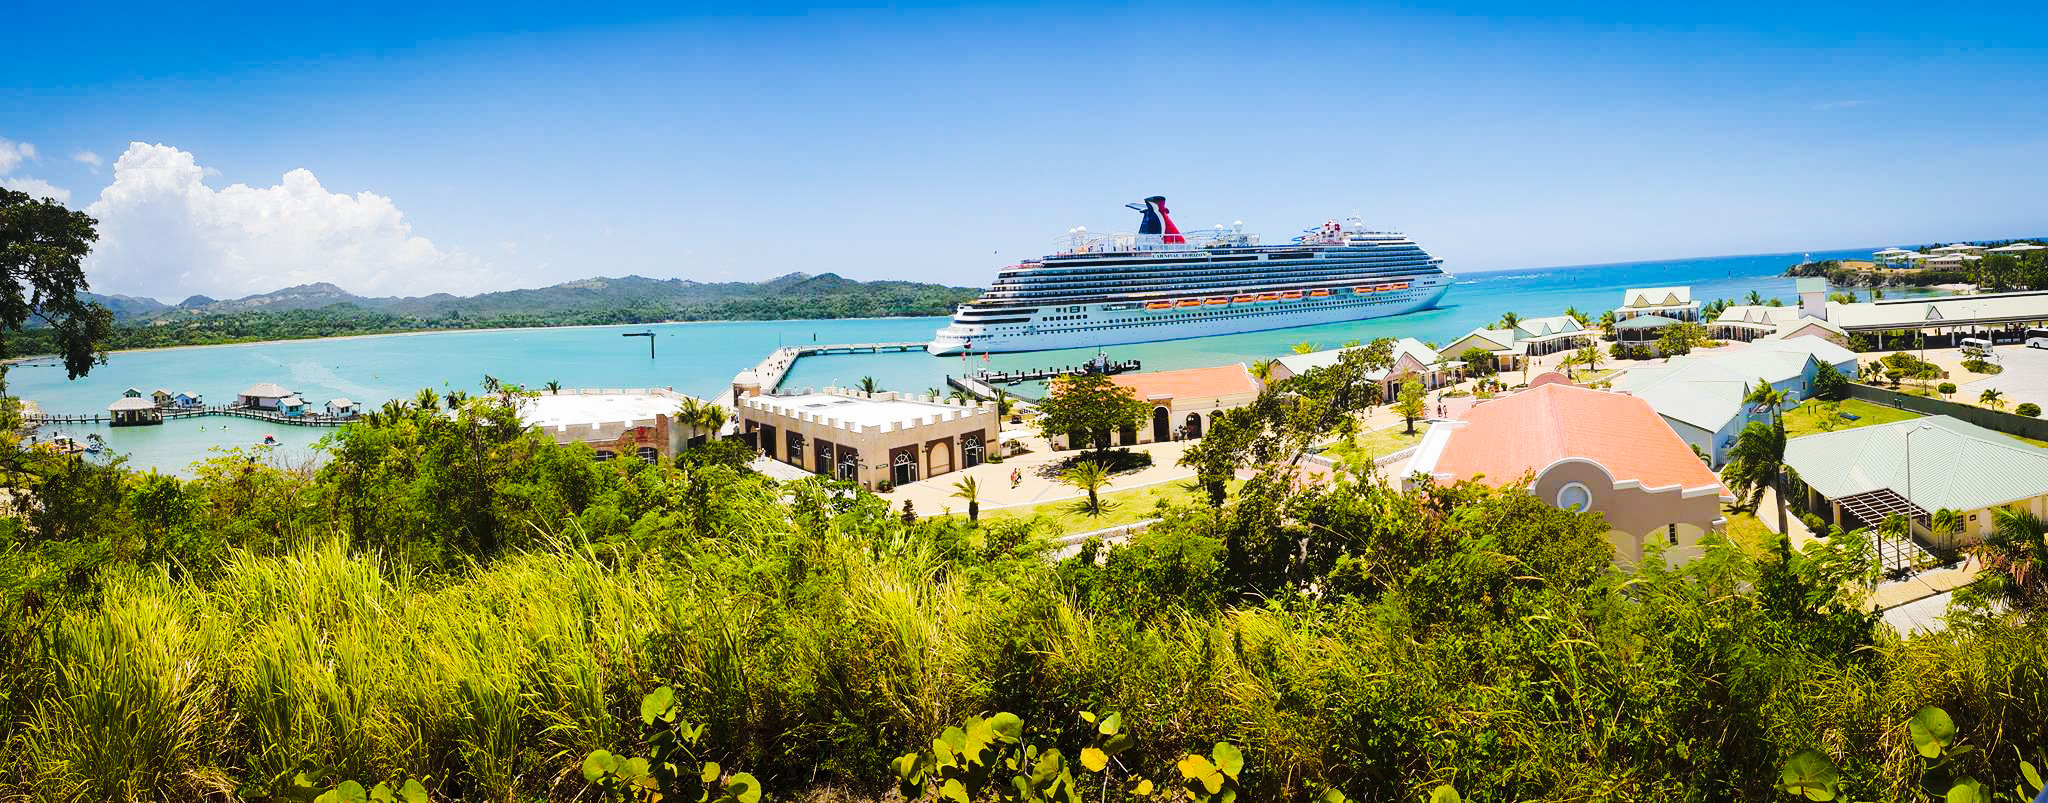 Amber Cove Cruise Port